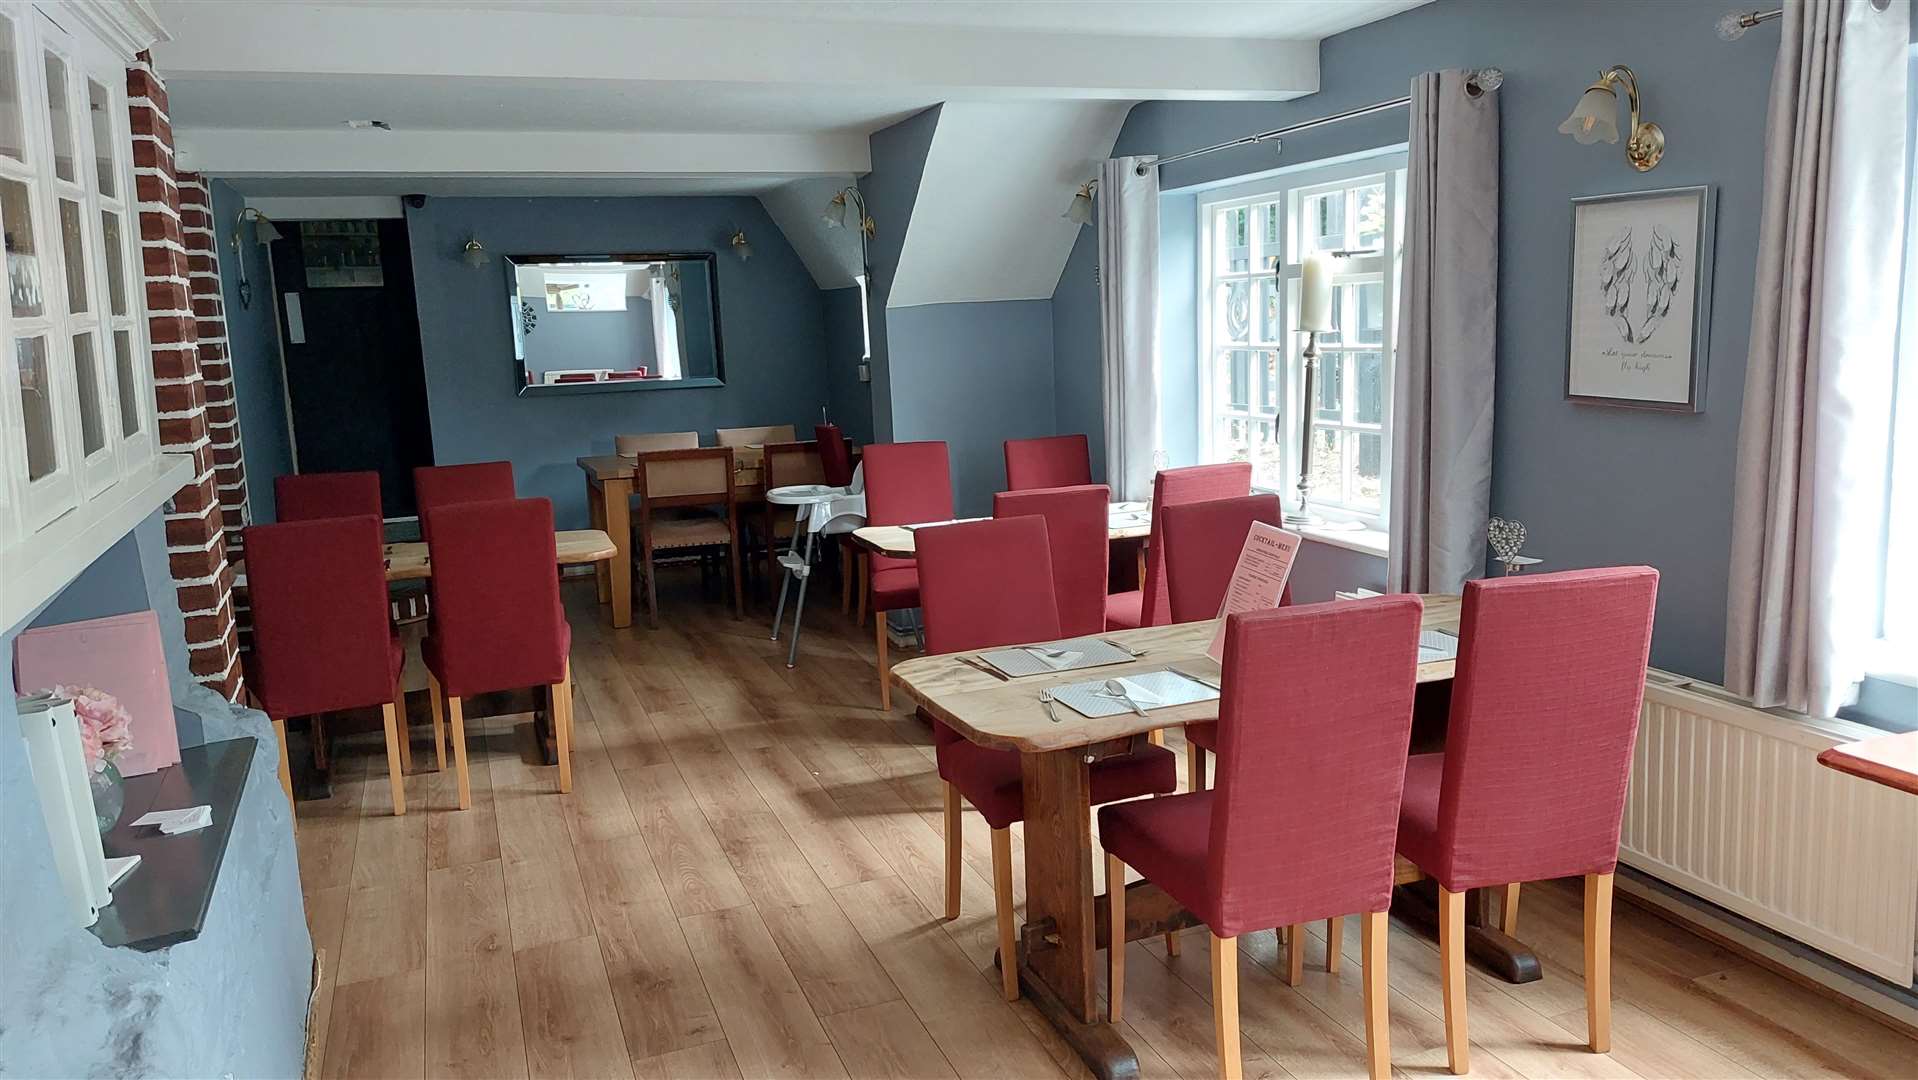 The revamped restaurant at the William Harvey Inn in Willesborough, Ashford